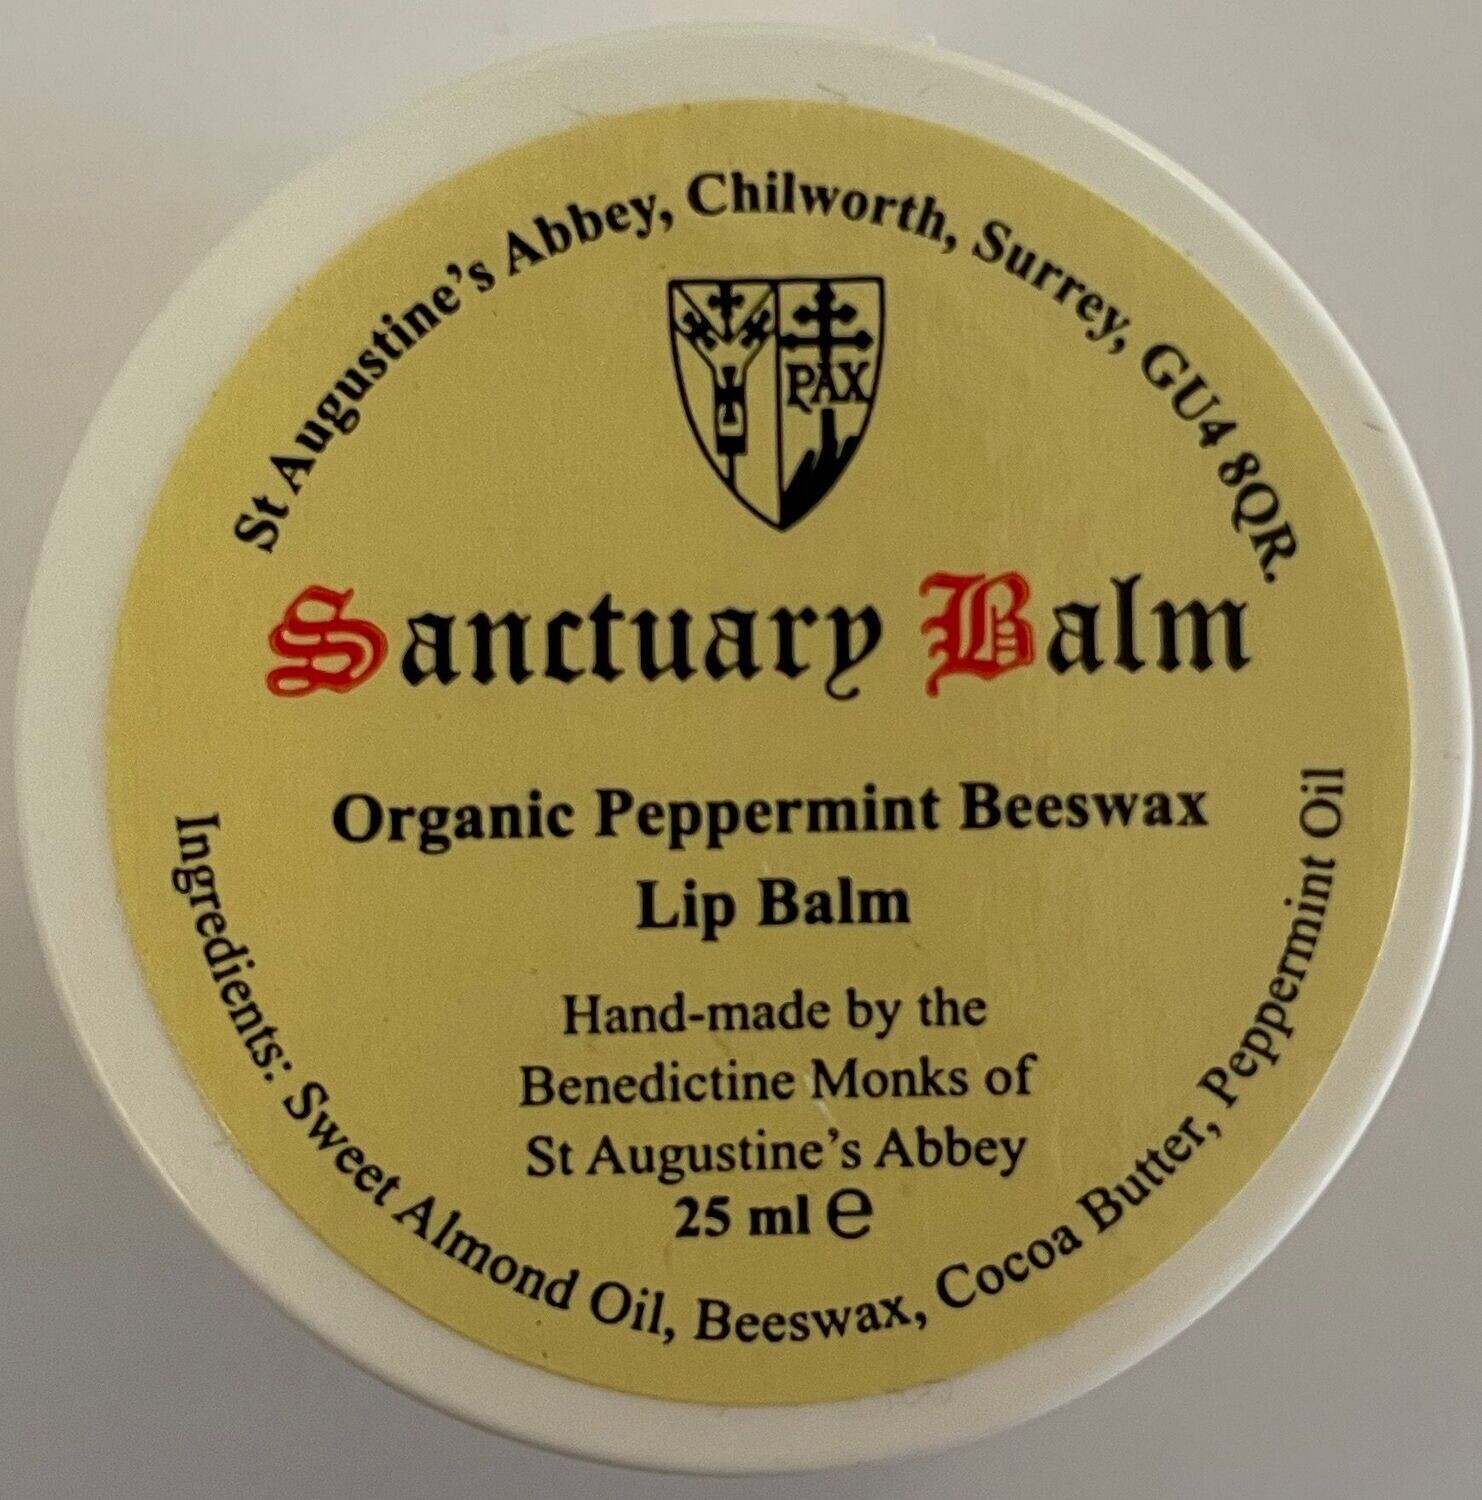 Sanctuary Balm - Organic Peppermint Beeswax - Lip Balm